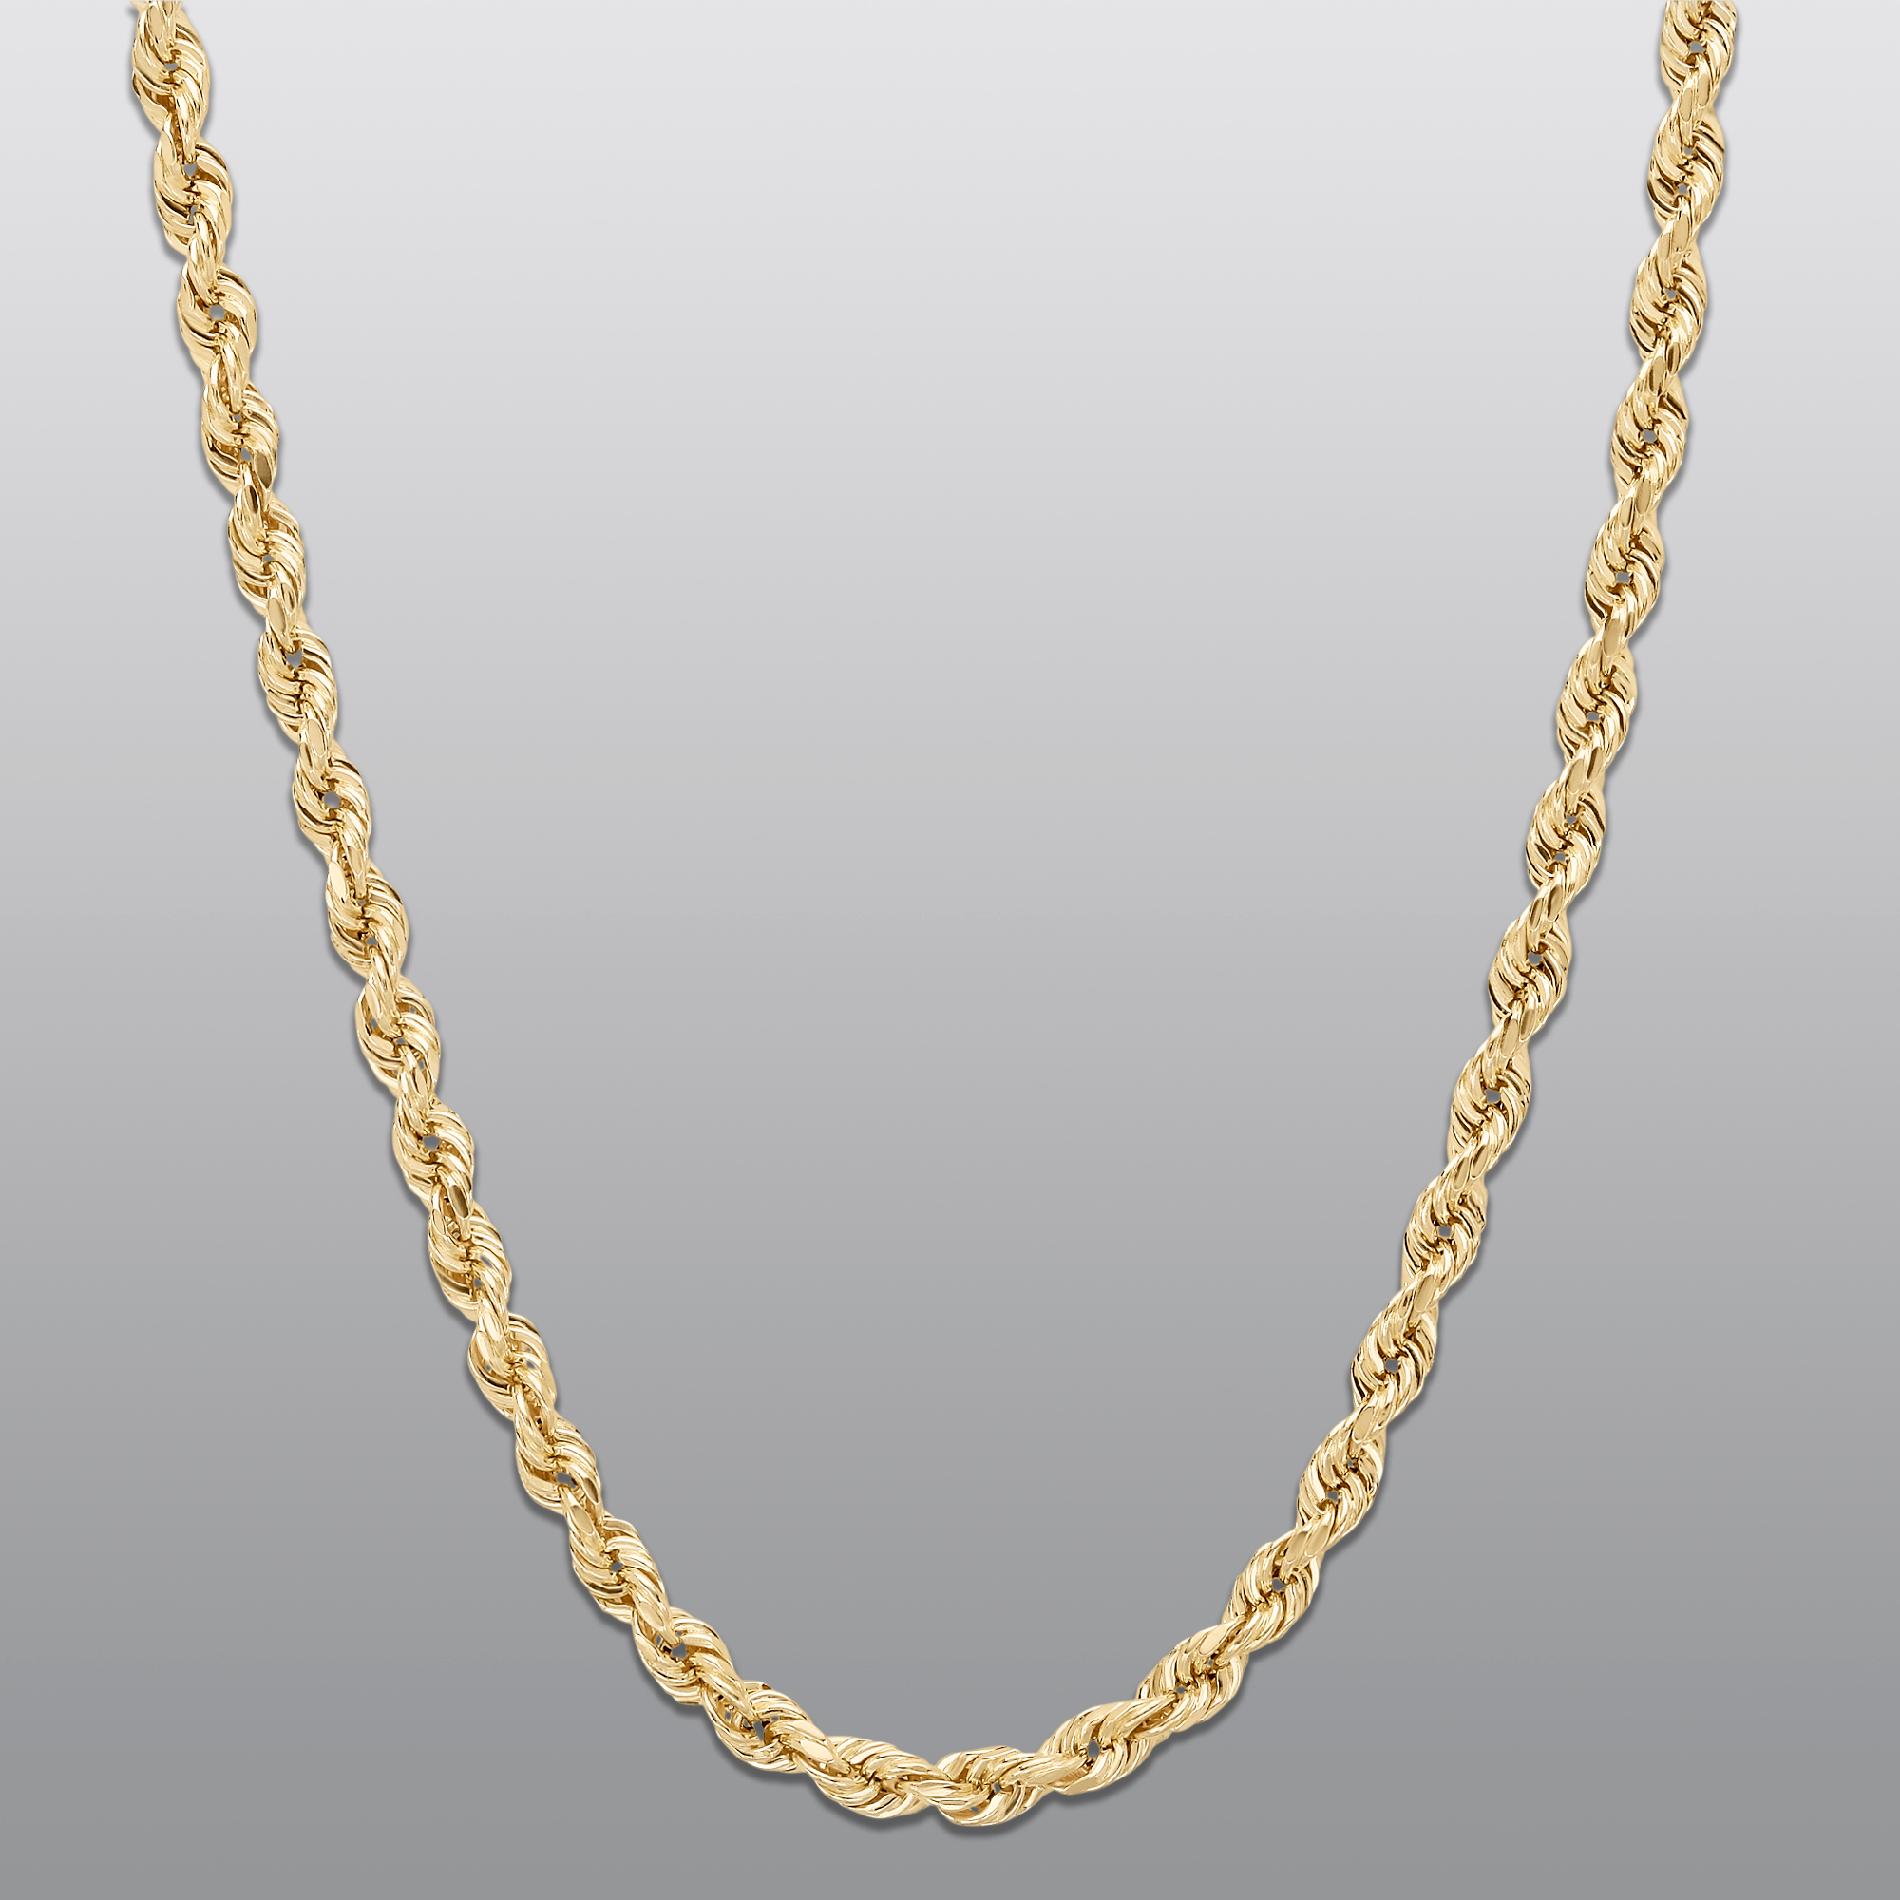 jewelry chain true gold 10k 20in. rope chain SGIFCGQ